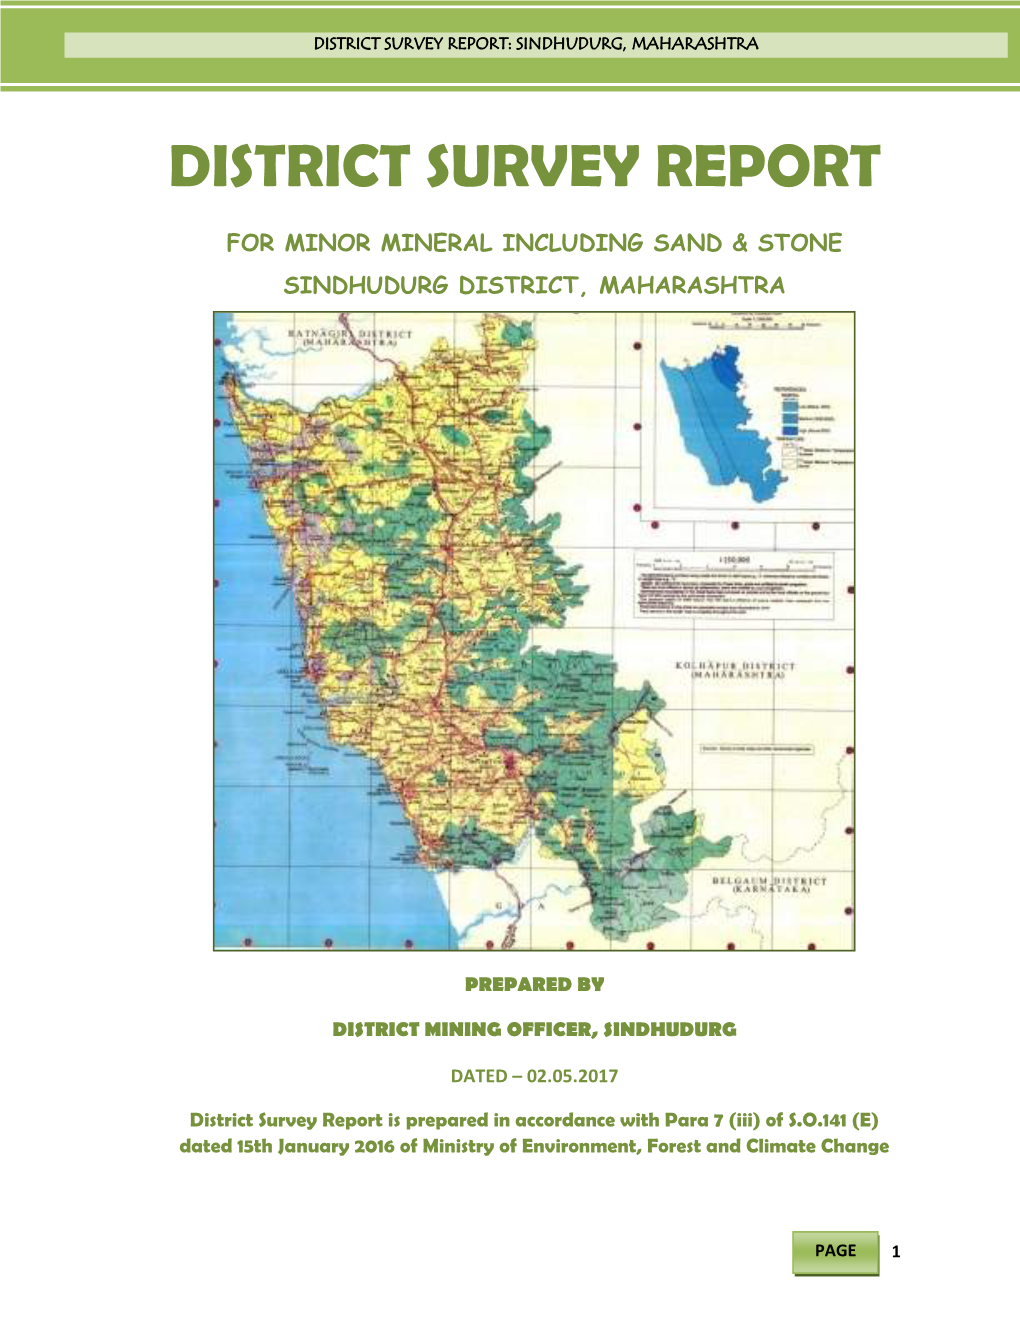 District Survey Report: Sindhudurg, Maharashtra